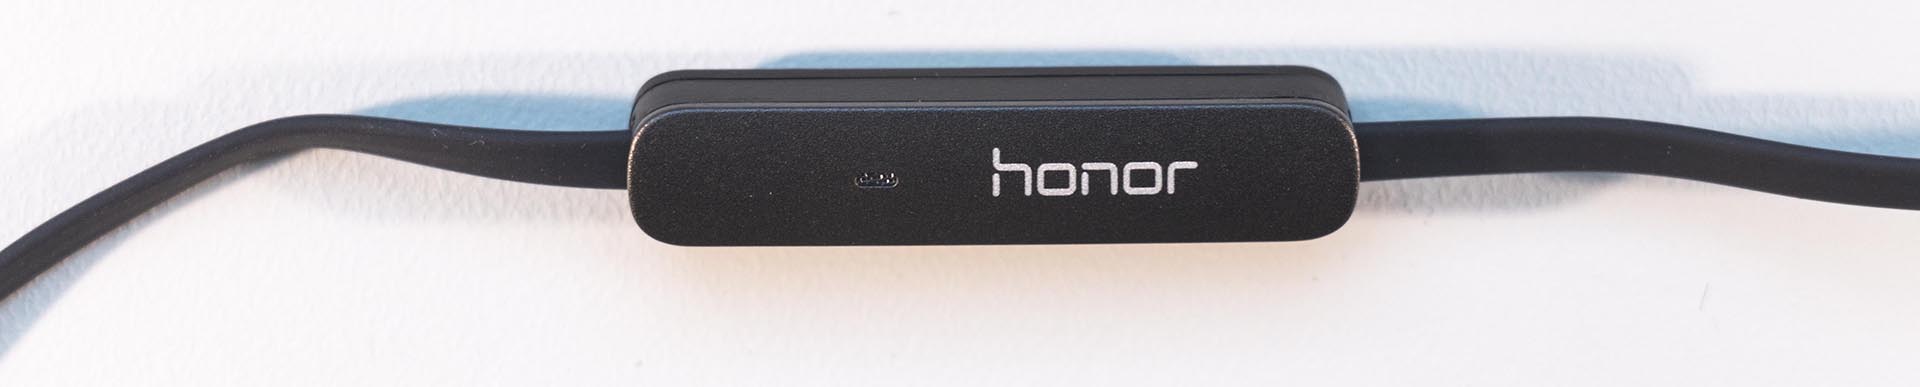 Honor Hybrid Earphones AM175 _MG_8376